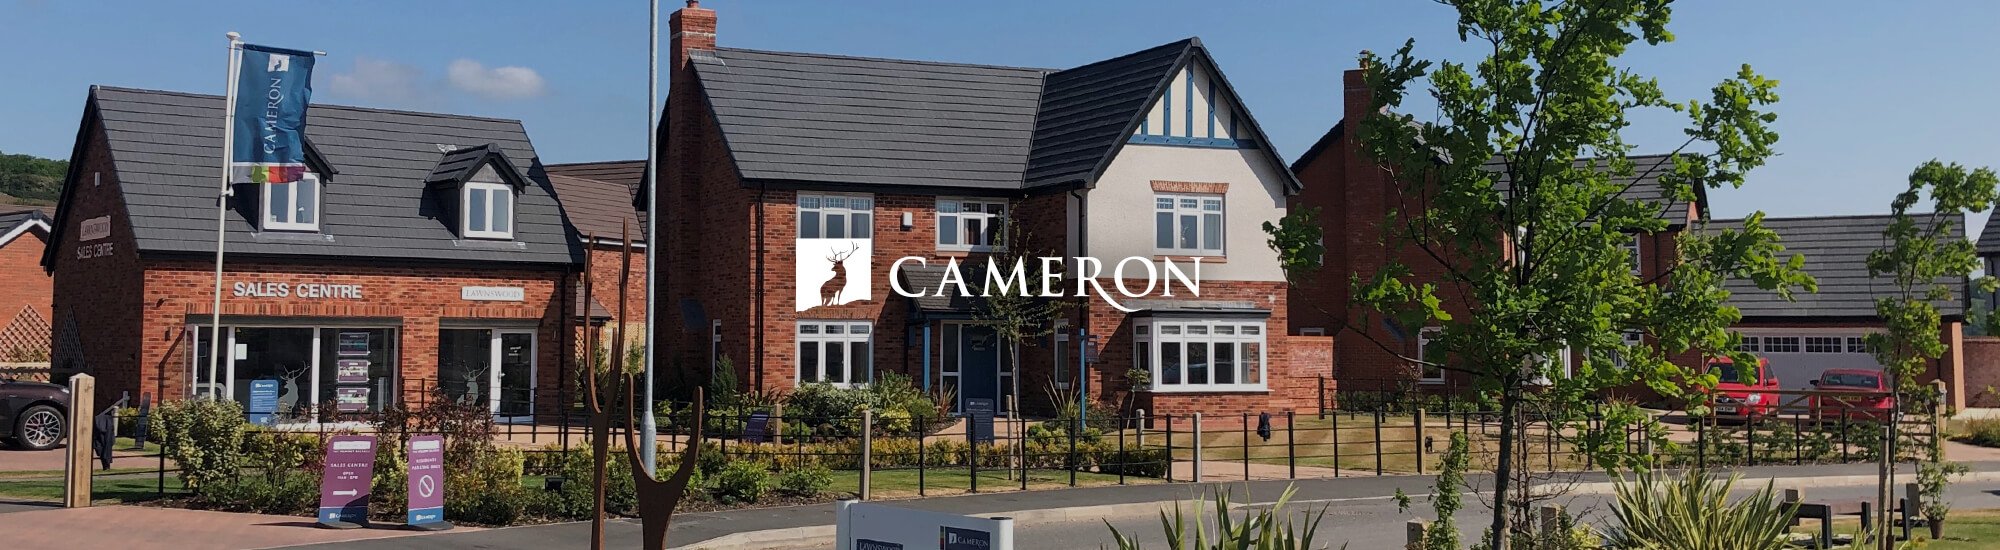 Cameron Homes Banner.